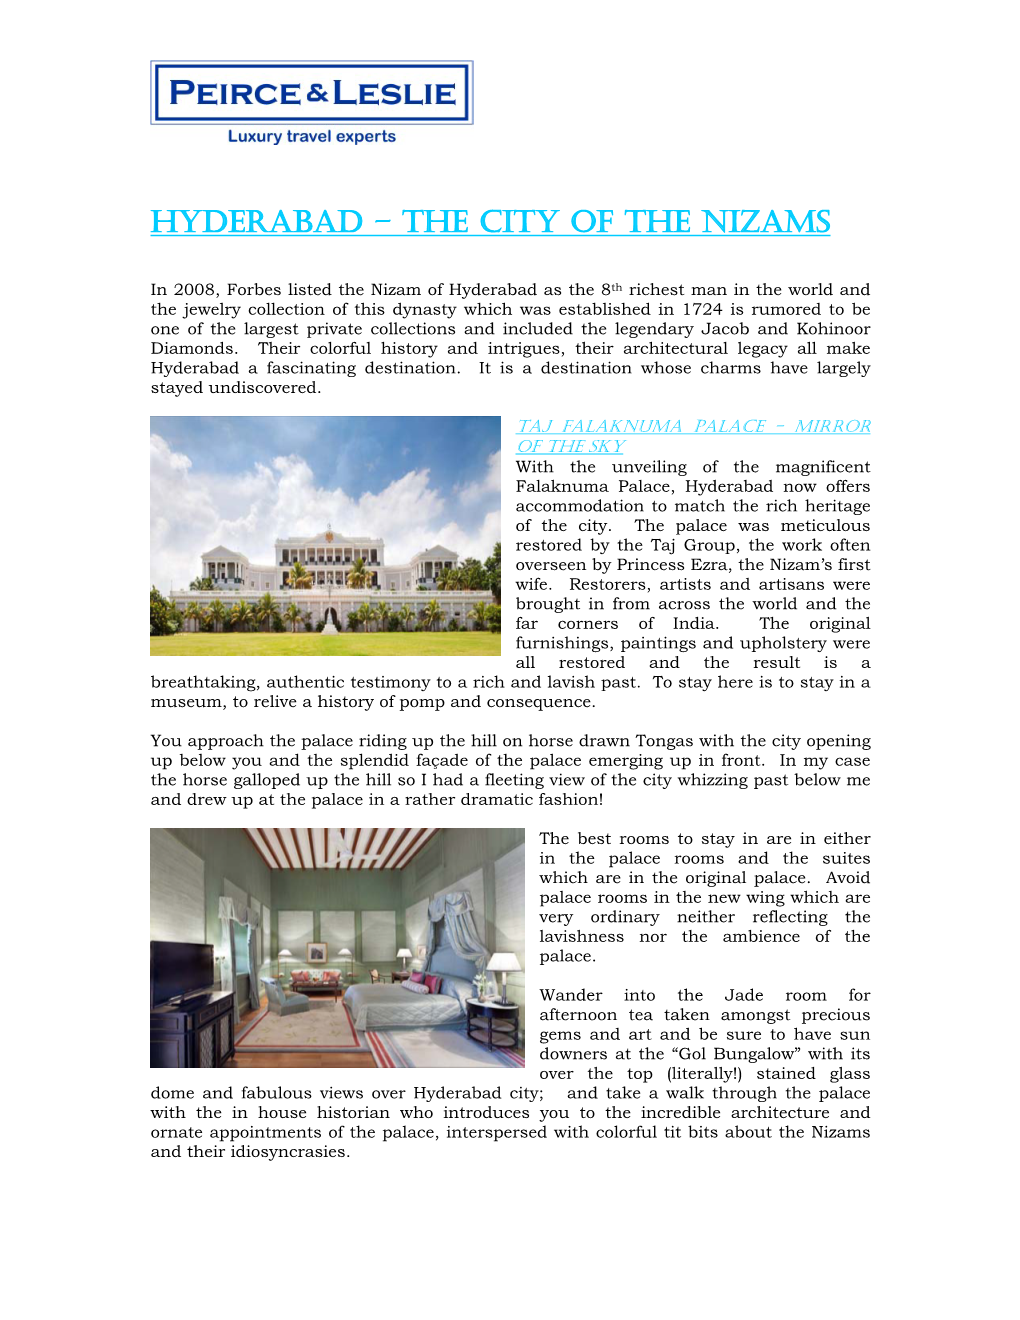 Hyderabad – the City of the Nizams